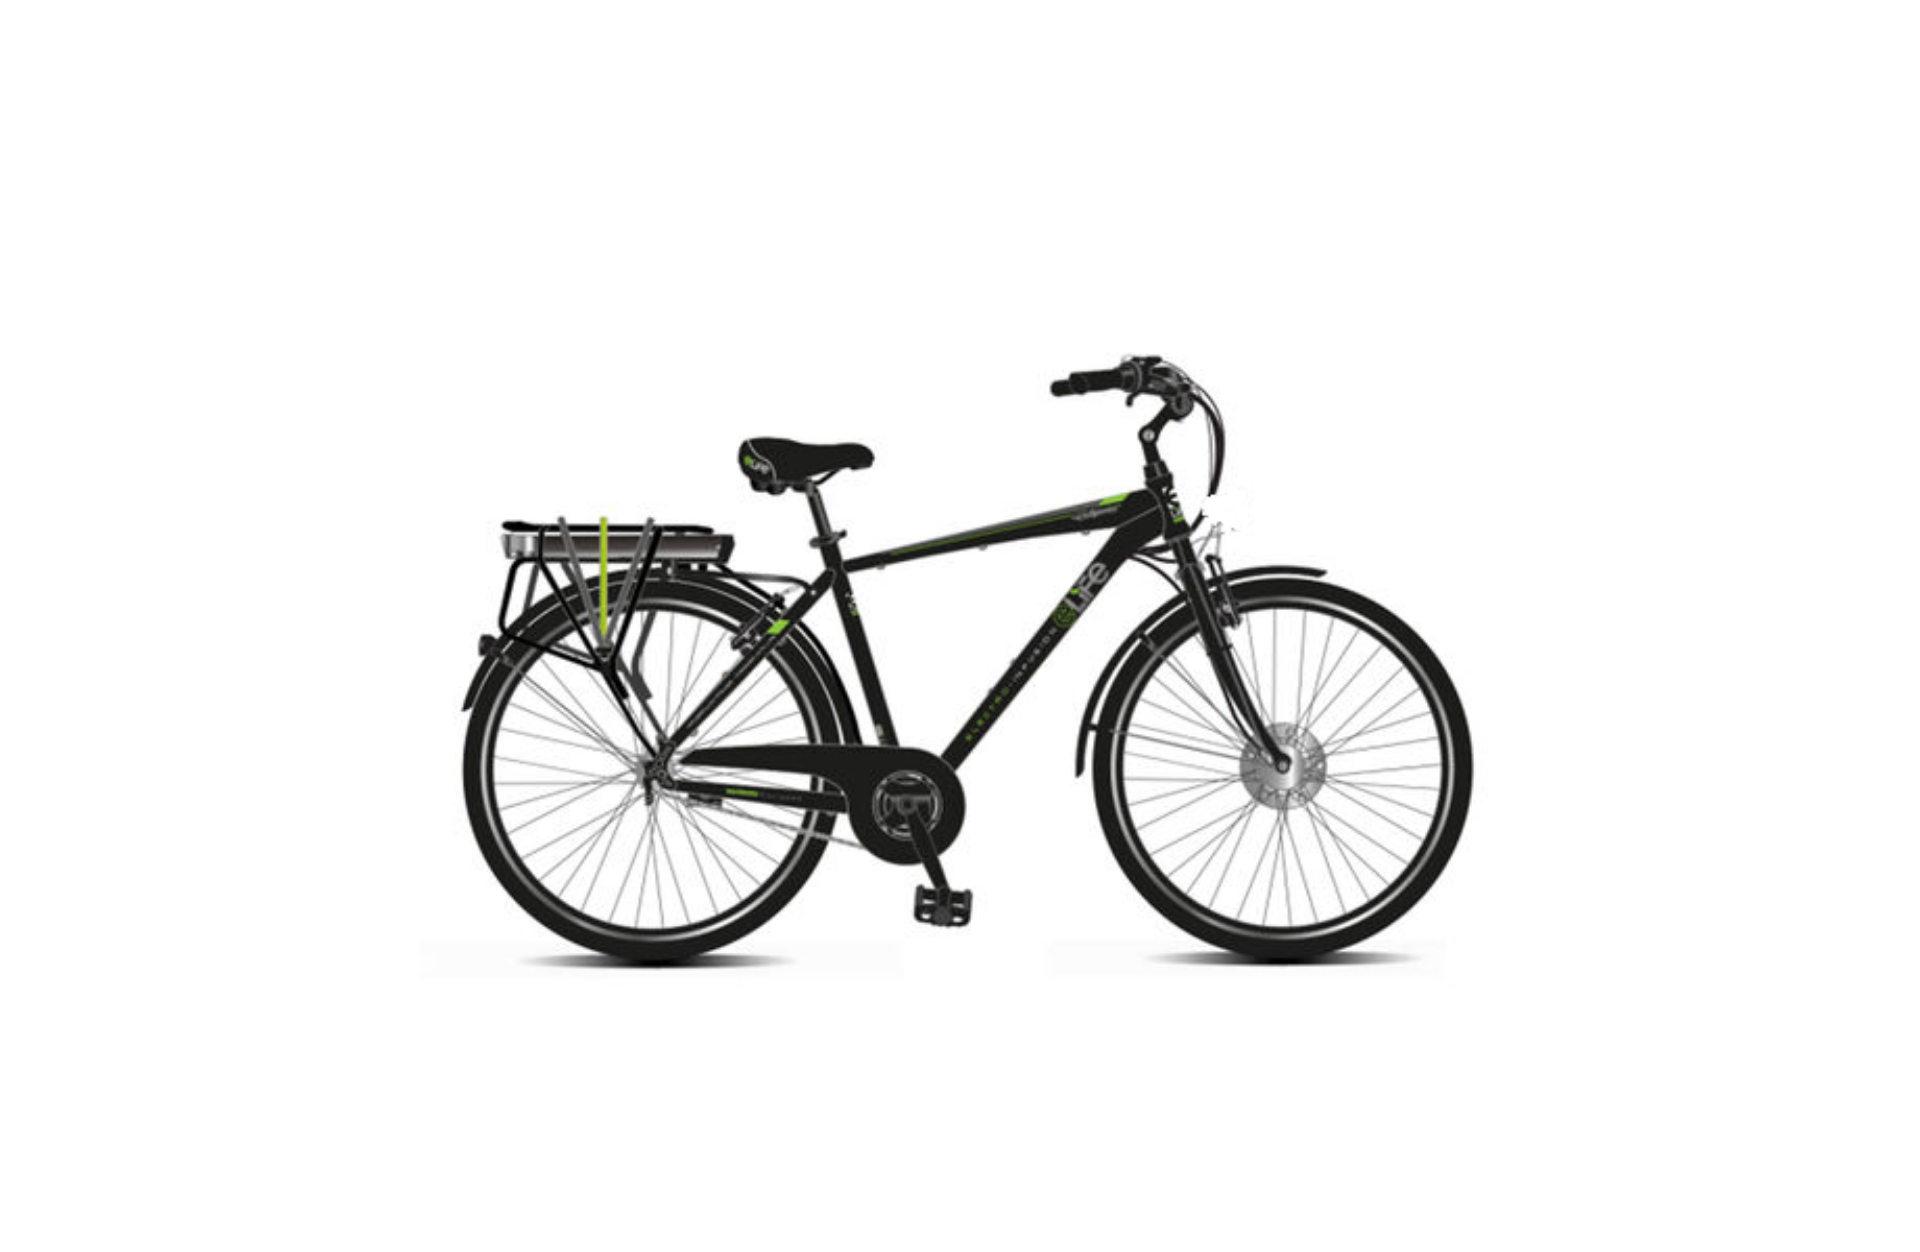 Brand New eBike PathFinder Ladies Black Electric Bike RRP £1299, Heritage just got modern. The